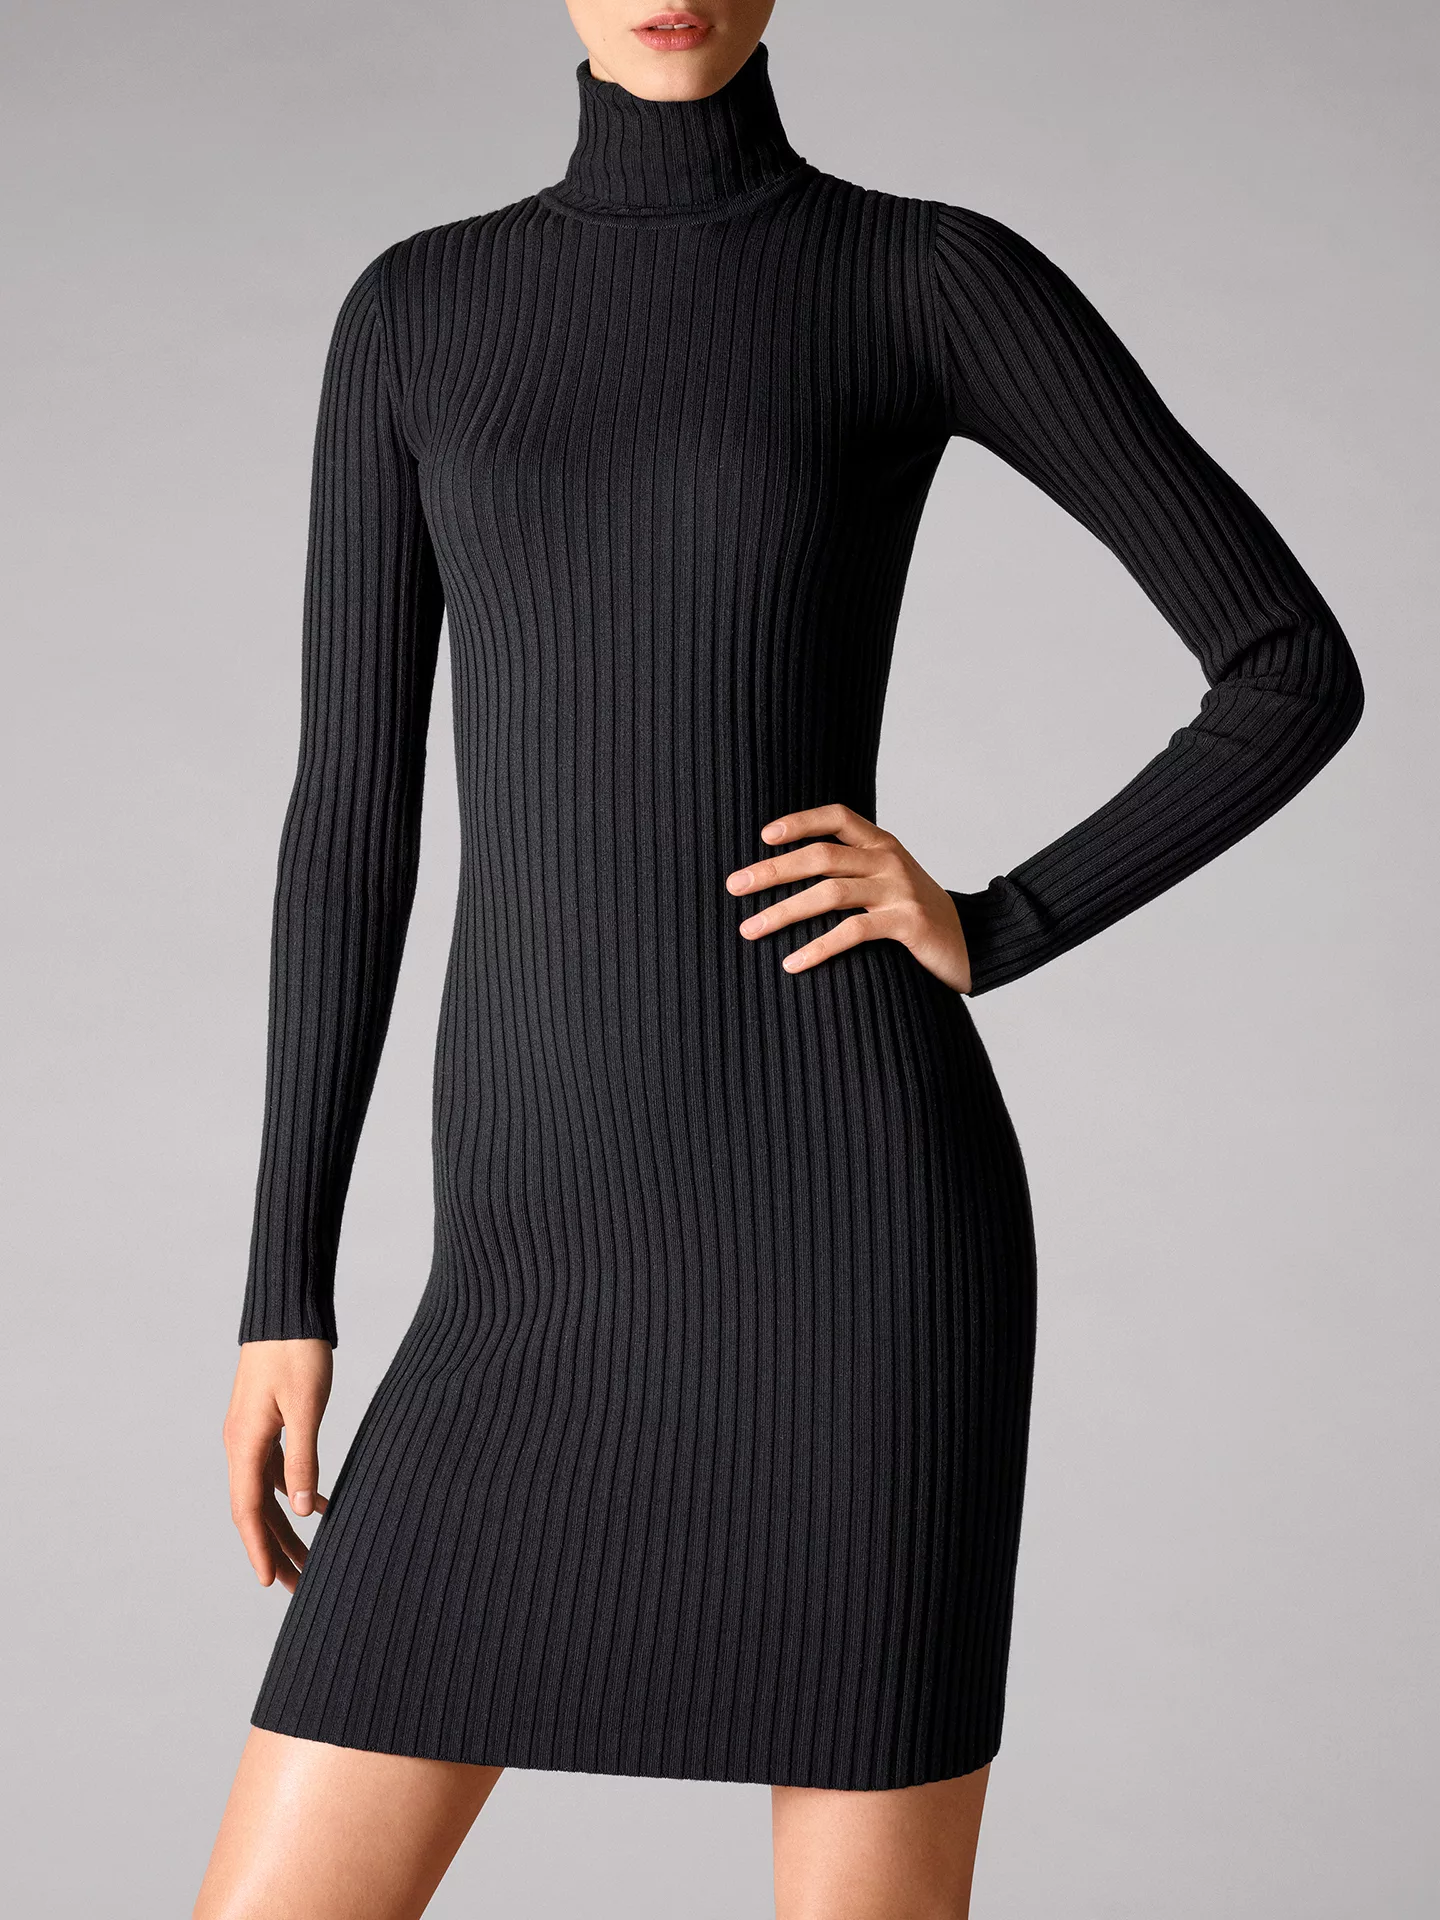 Wolford - Merino Rib Dress, Frau, black, Größe: M günstig online kaufen